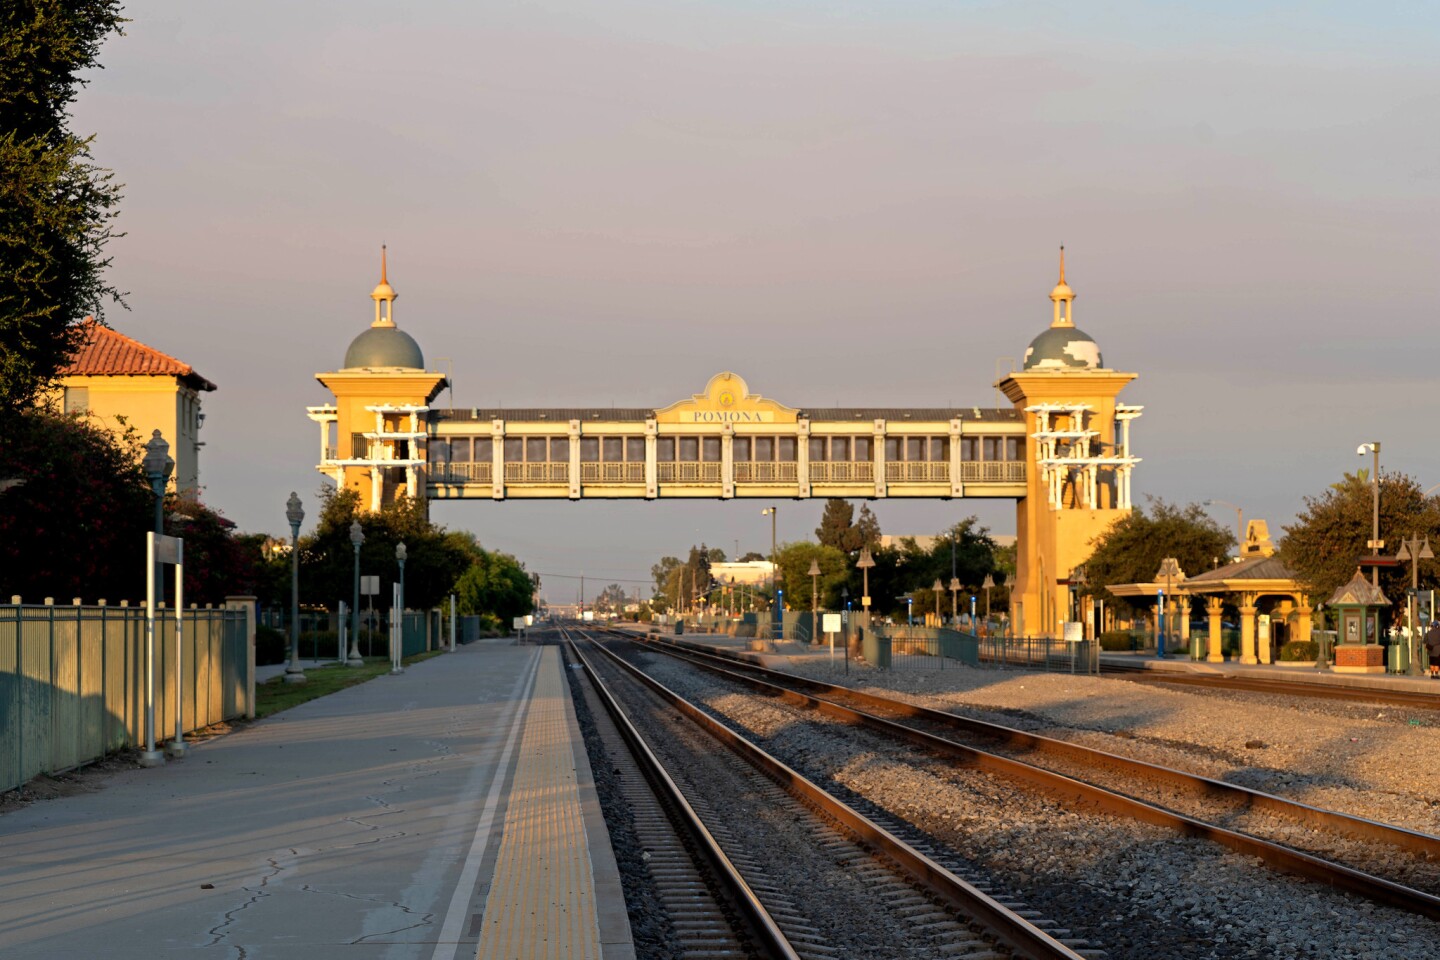 Pomona Railway Station